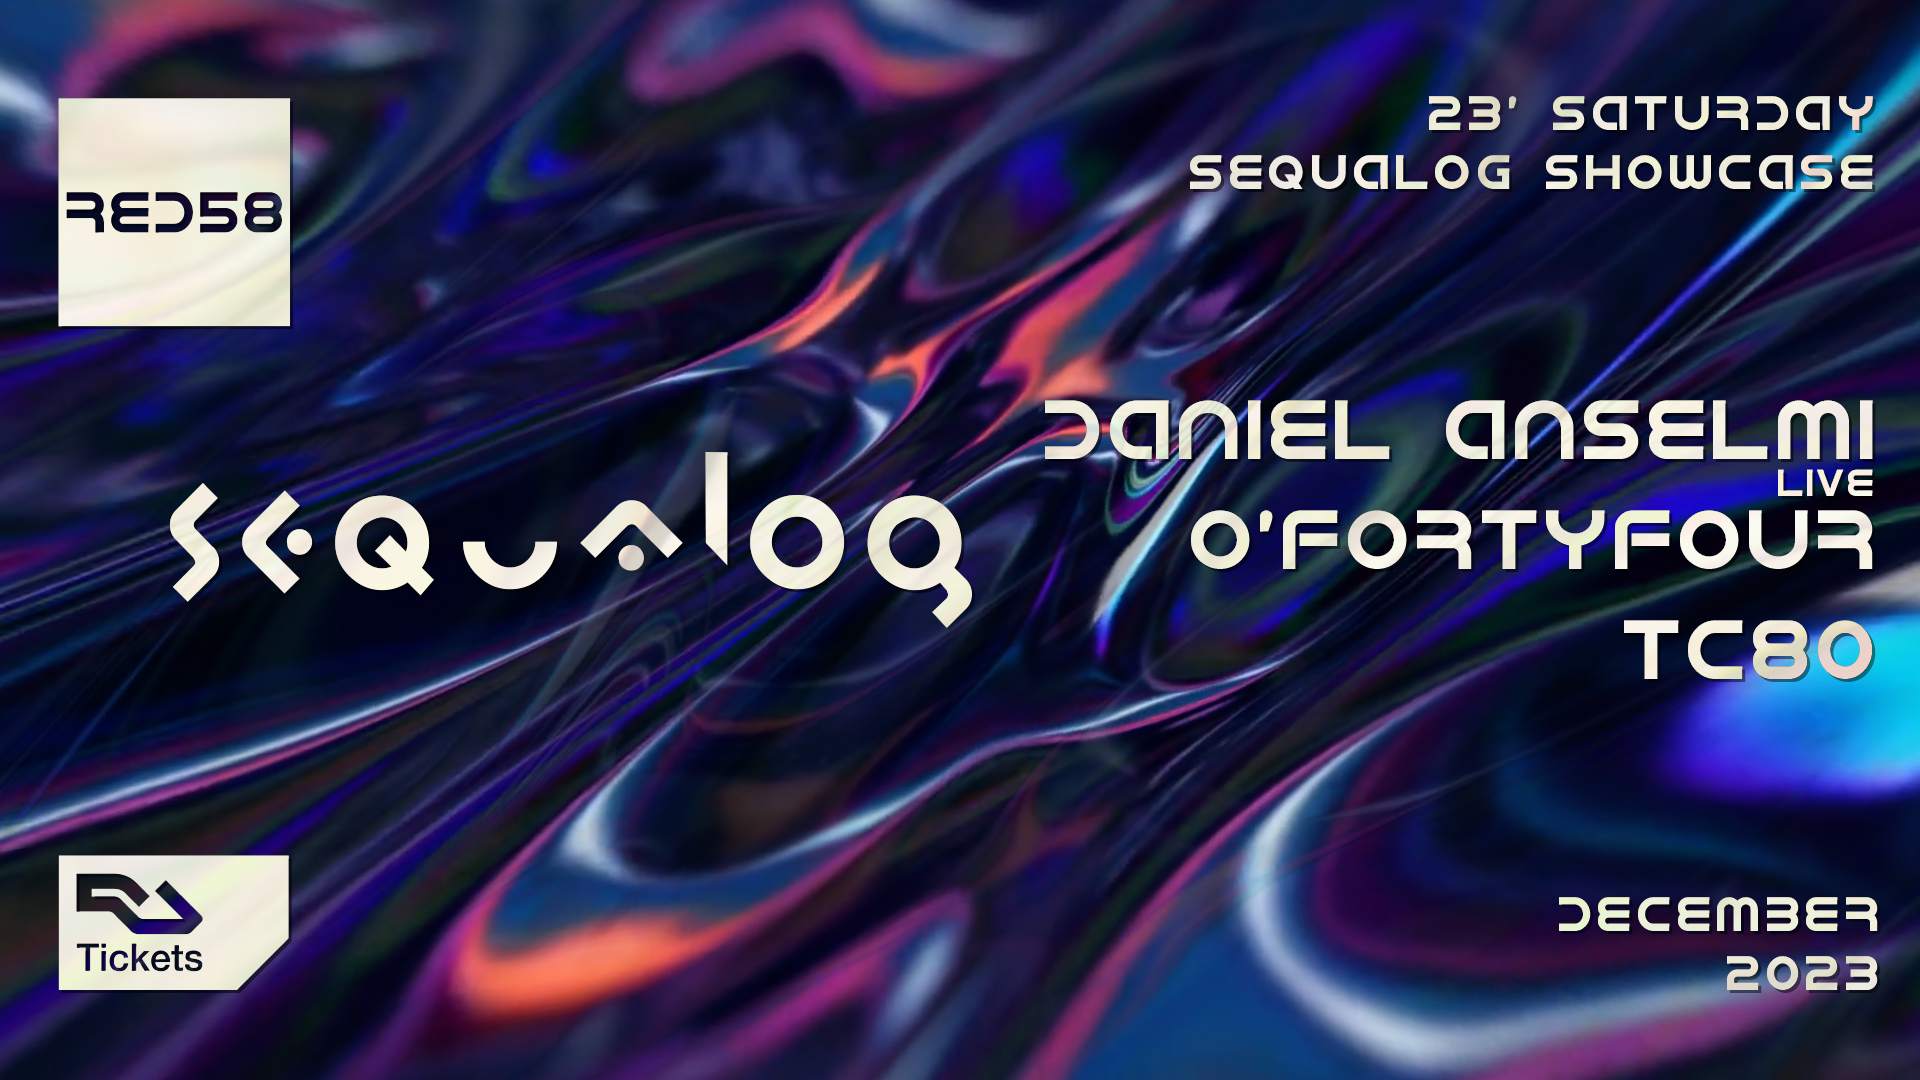 Sequalog Showcase with Daniel Anselmi (LIVE), O'FourtyFour & TC80 - フライヤー表